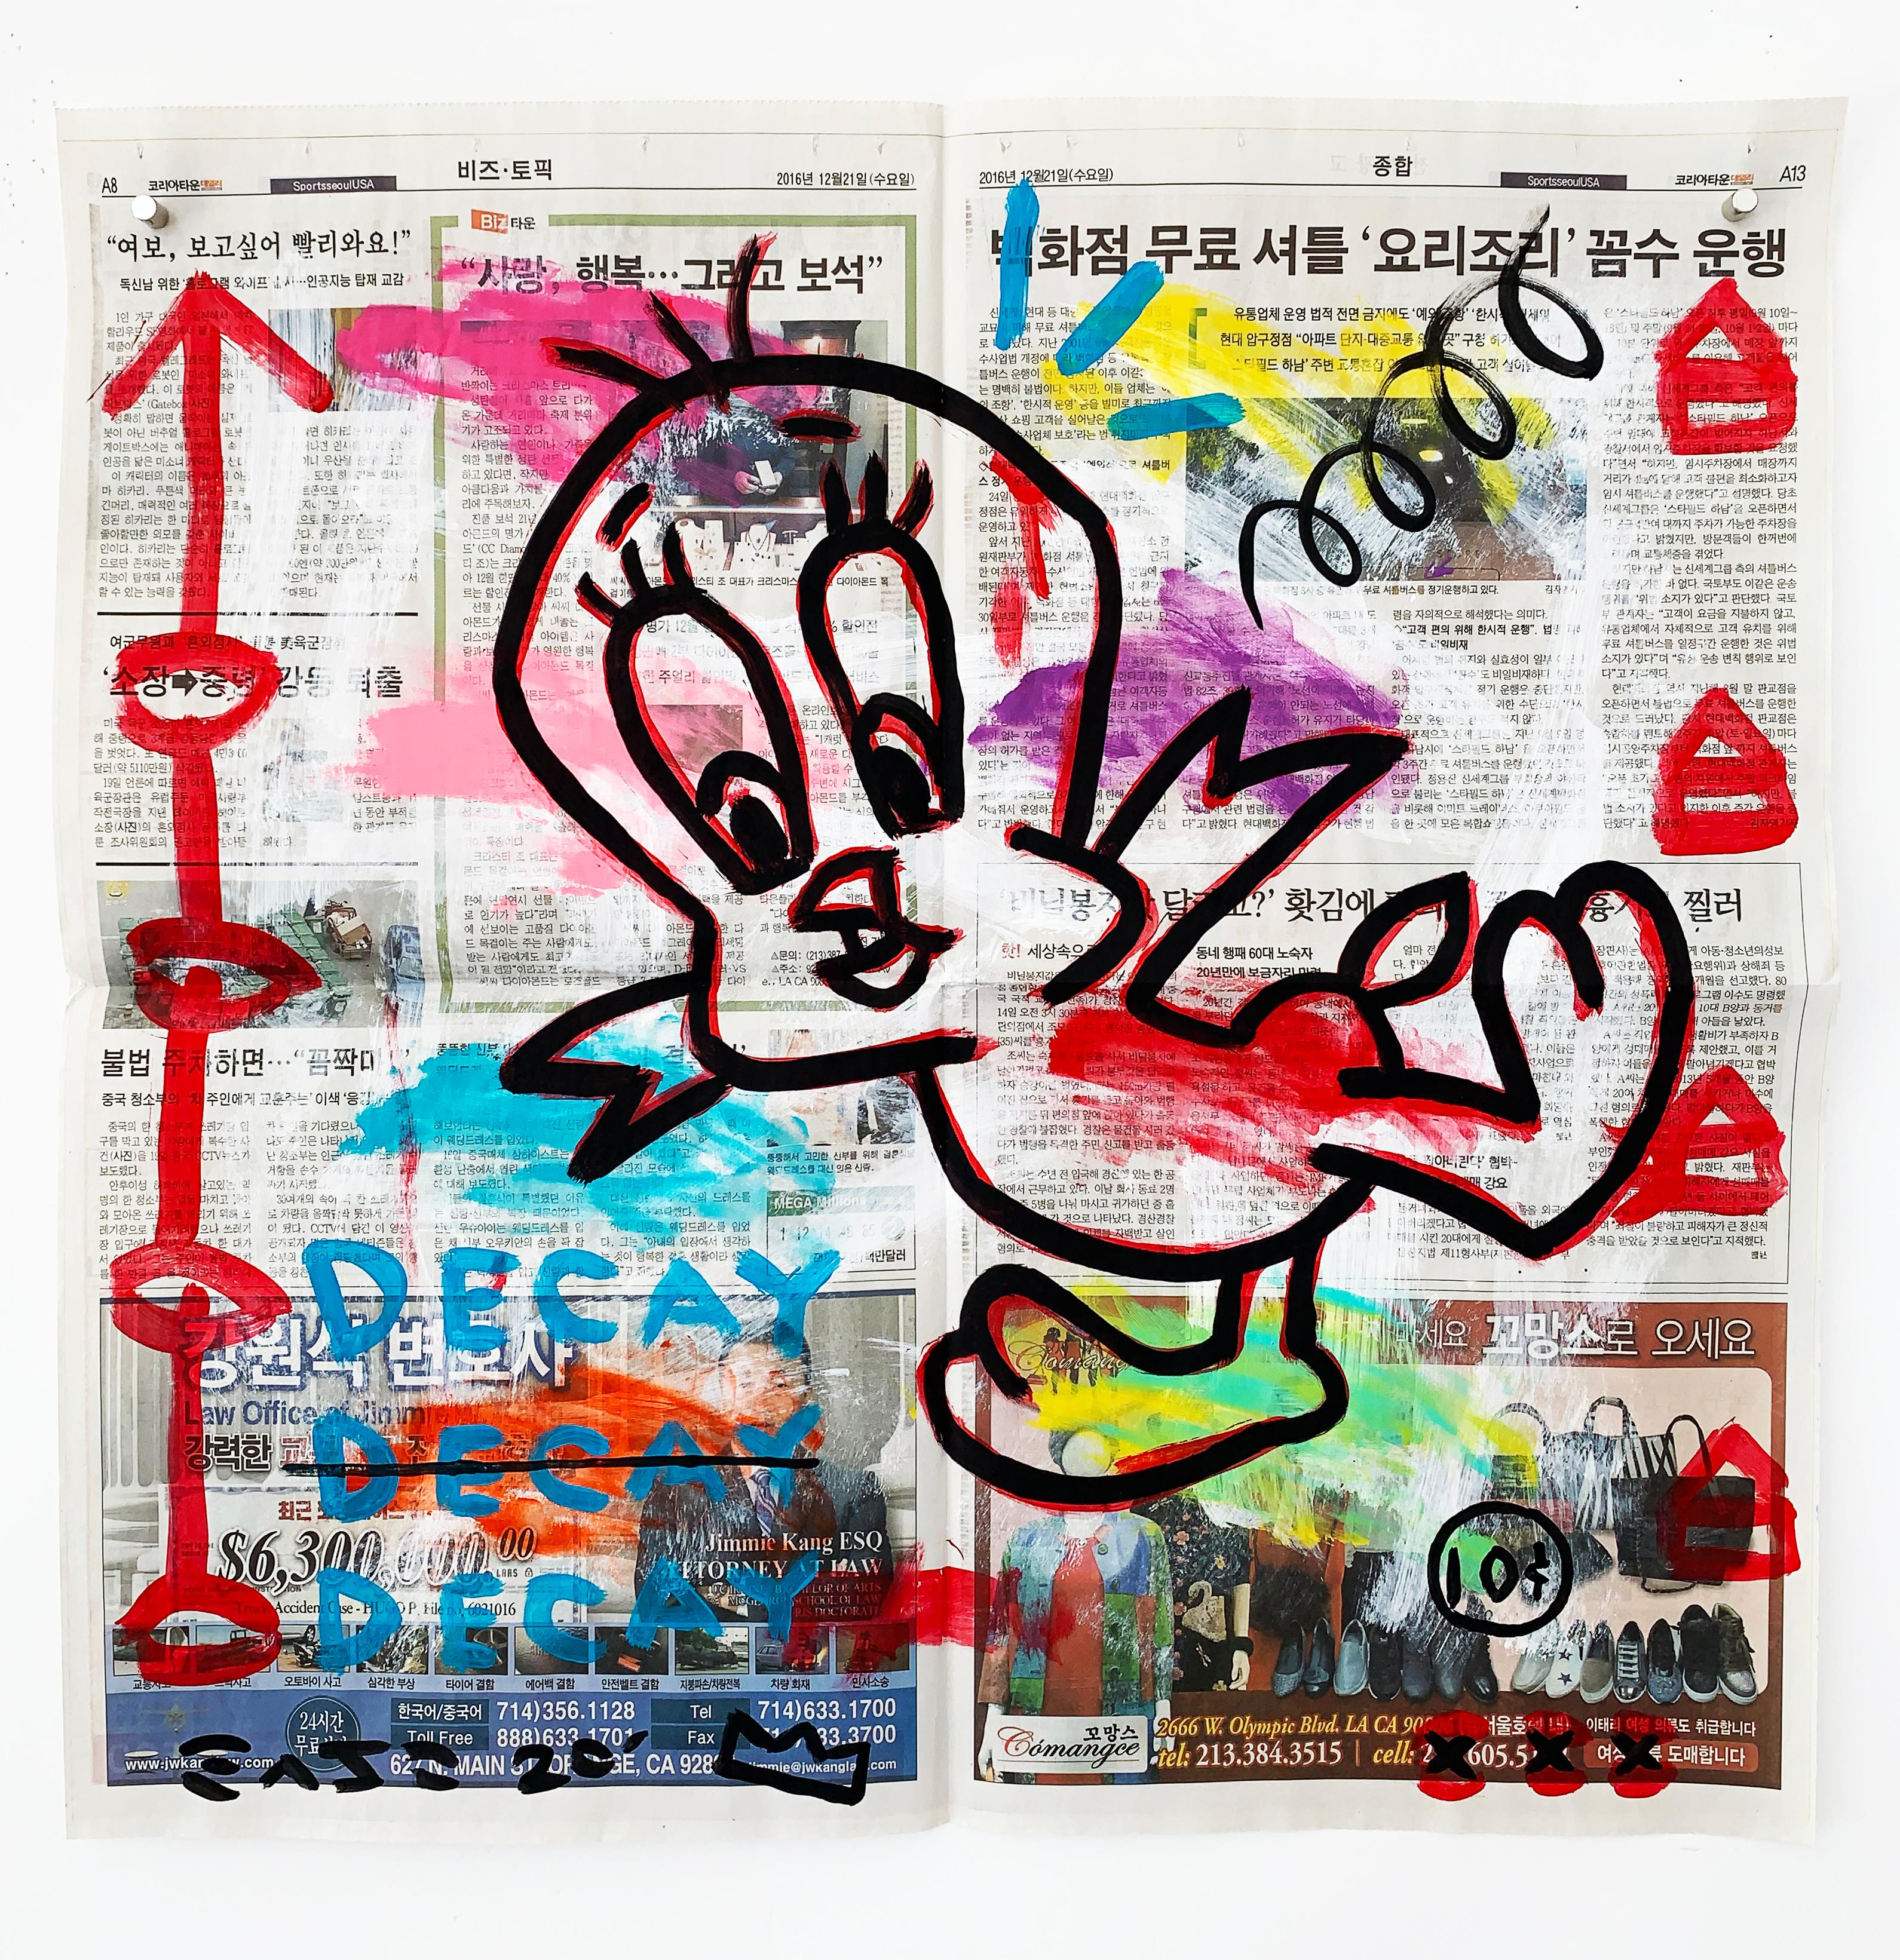 Gary John Figurative Print - "Tweety Decay" Acrylic and Collage on Korean newsprint